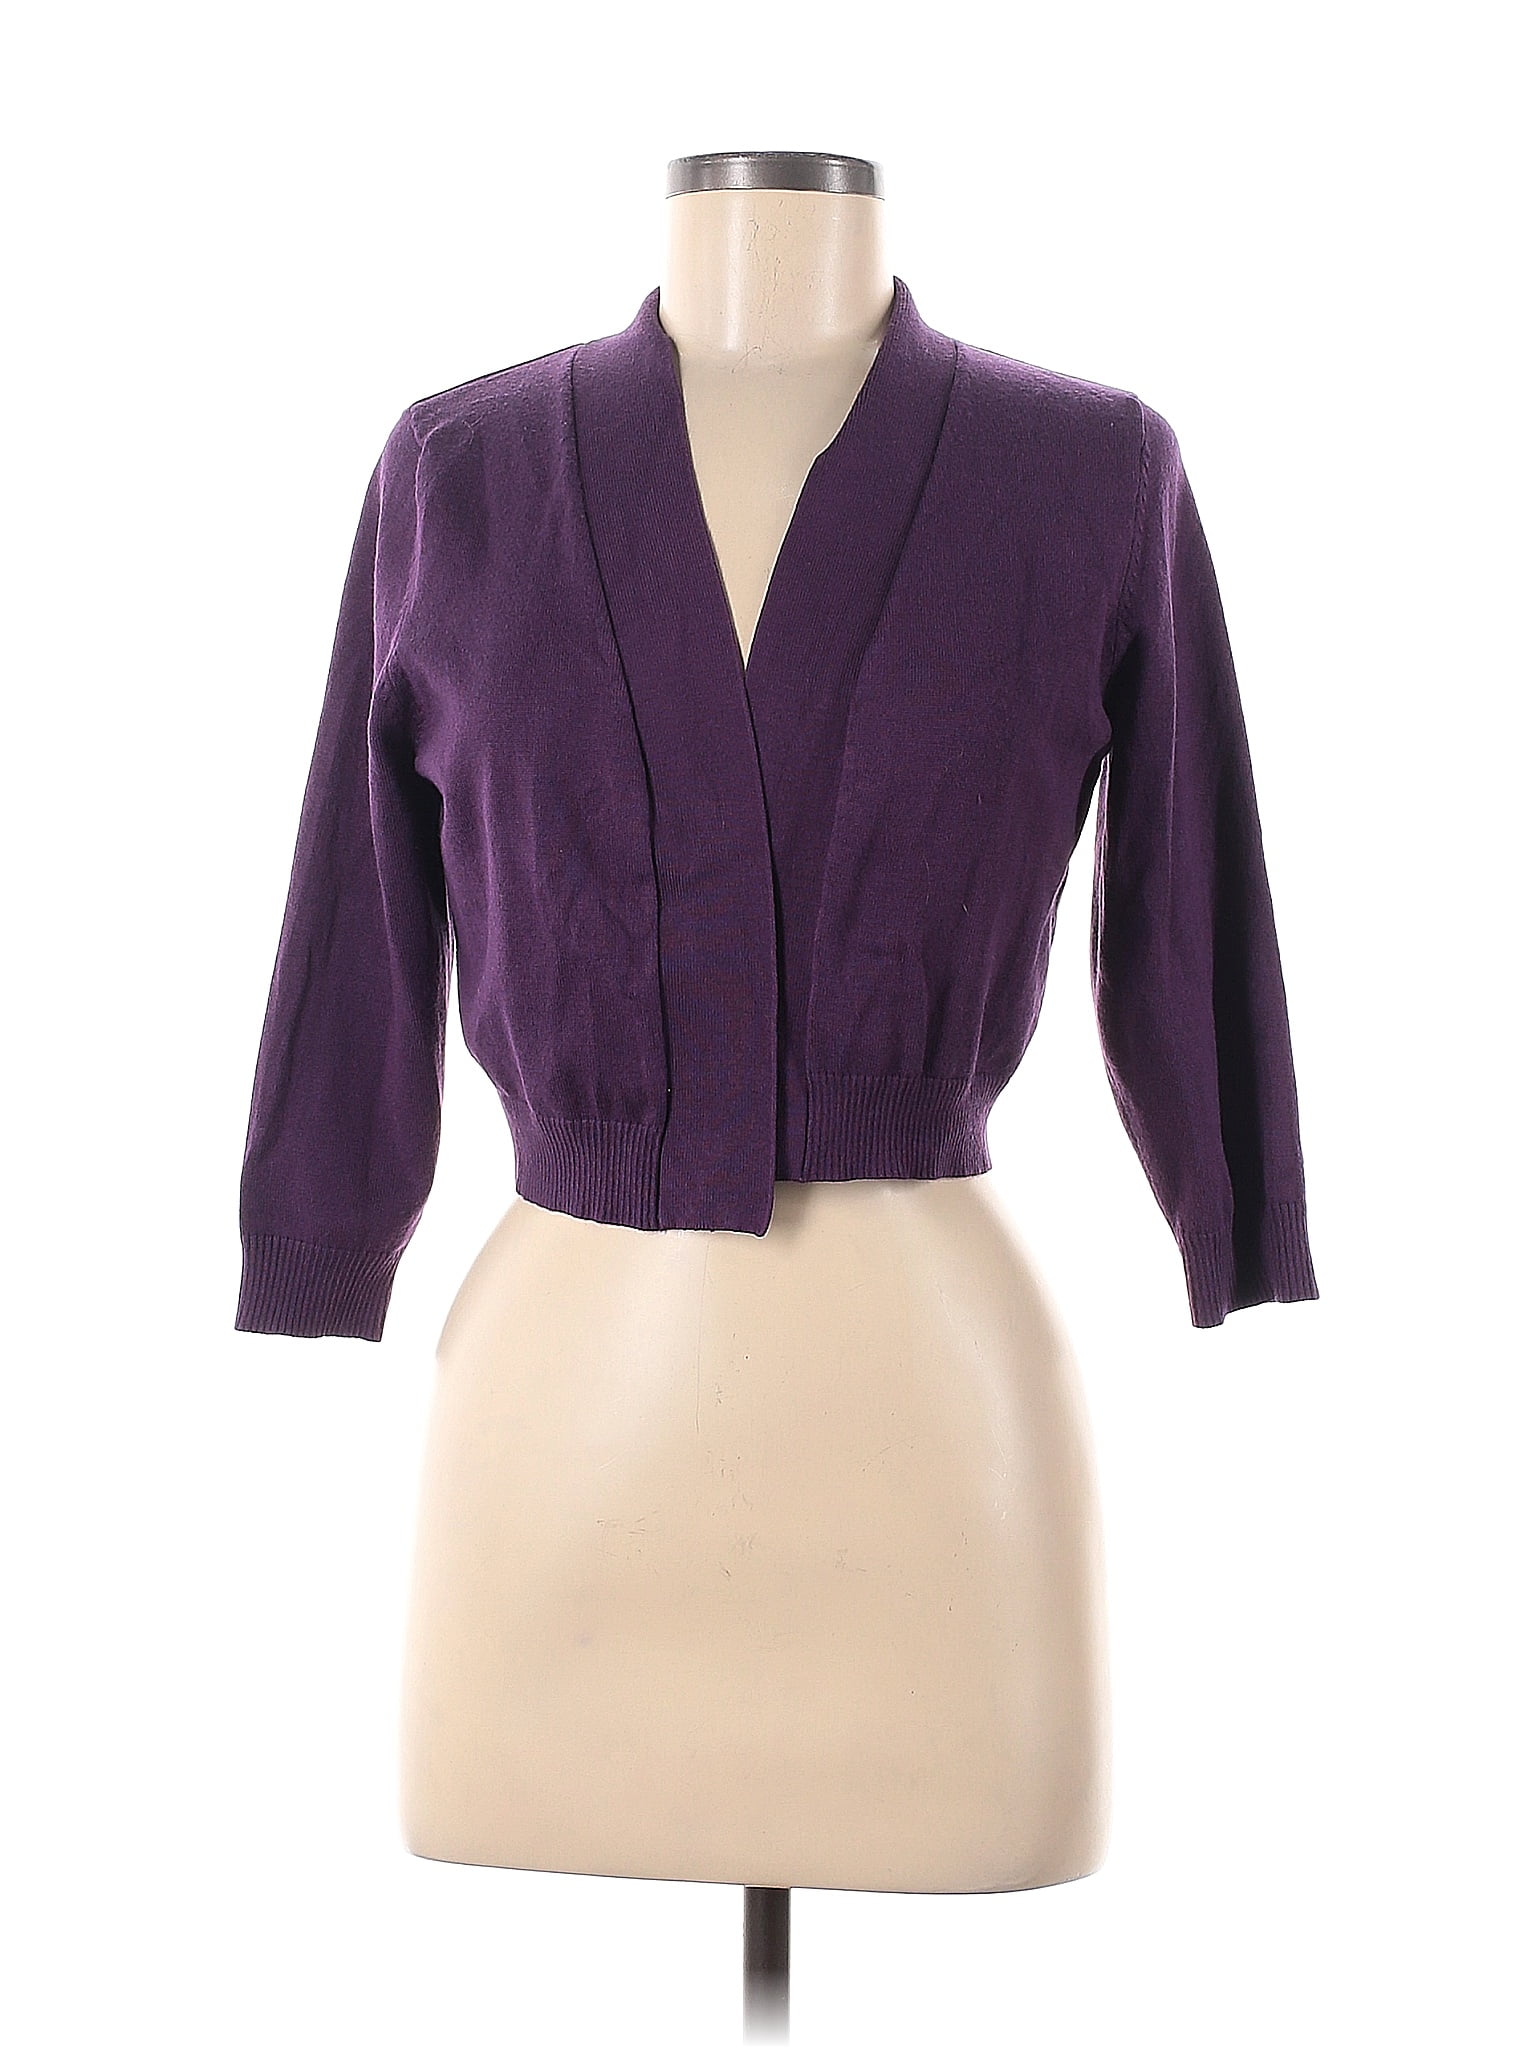 89th & Madison Color Block Solid Purple Cardigan Size M - 60% off | ThredUp